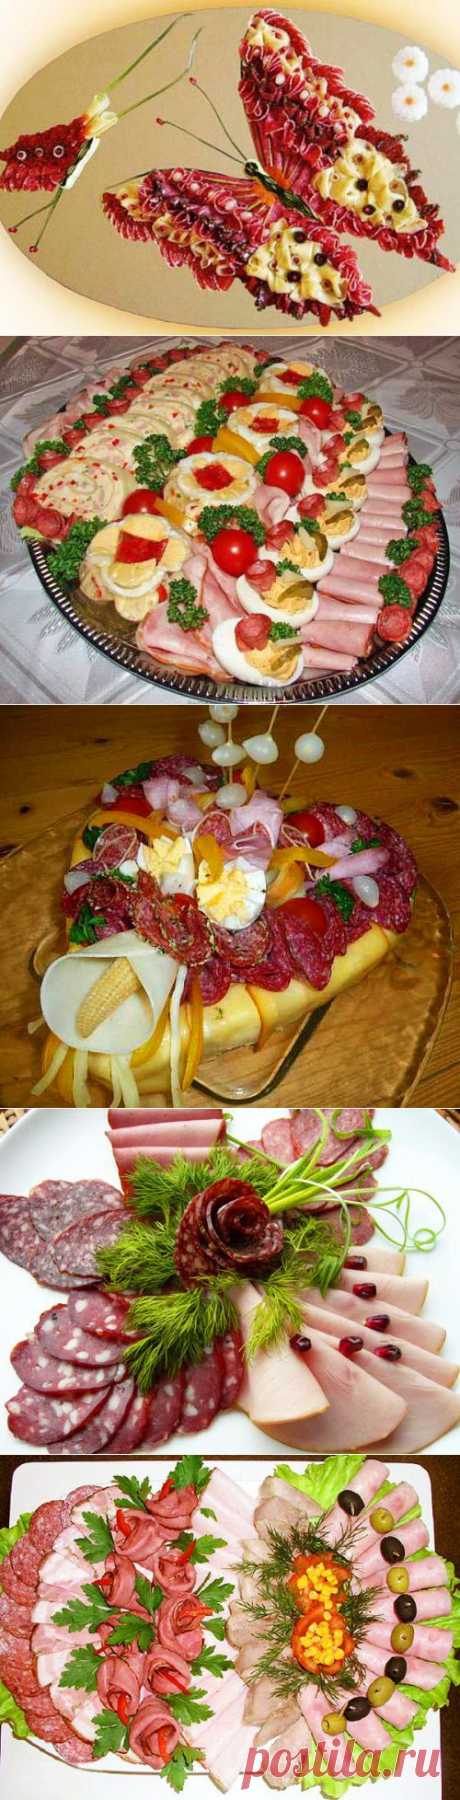 Праздничная нарезка: мясная тарелка. Супер коллекция - Простые рецепты Овкусе.ру